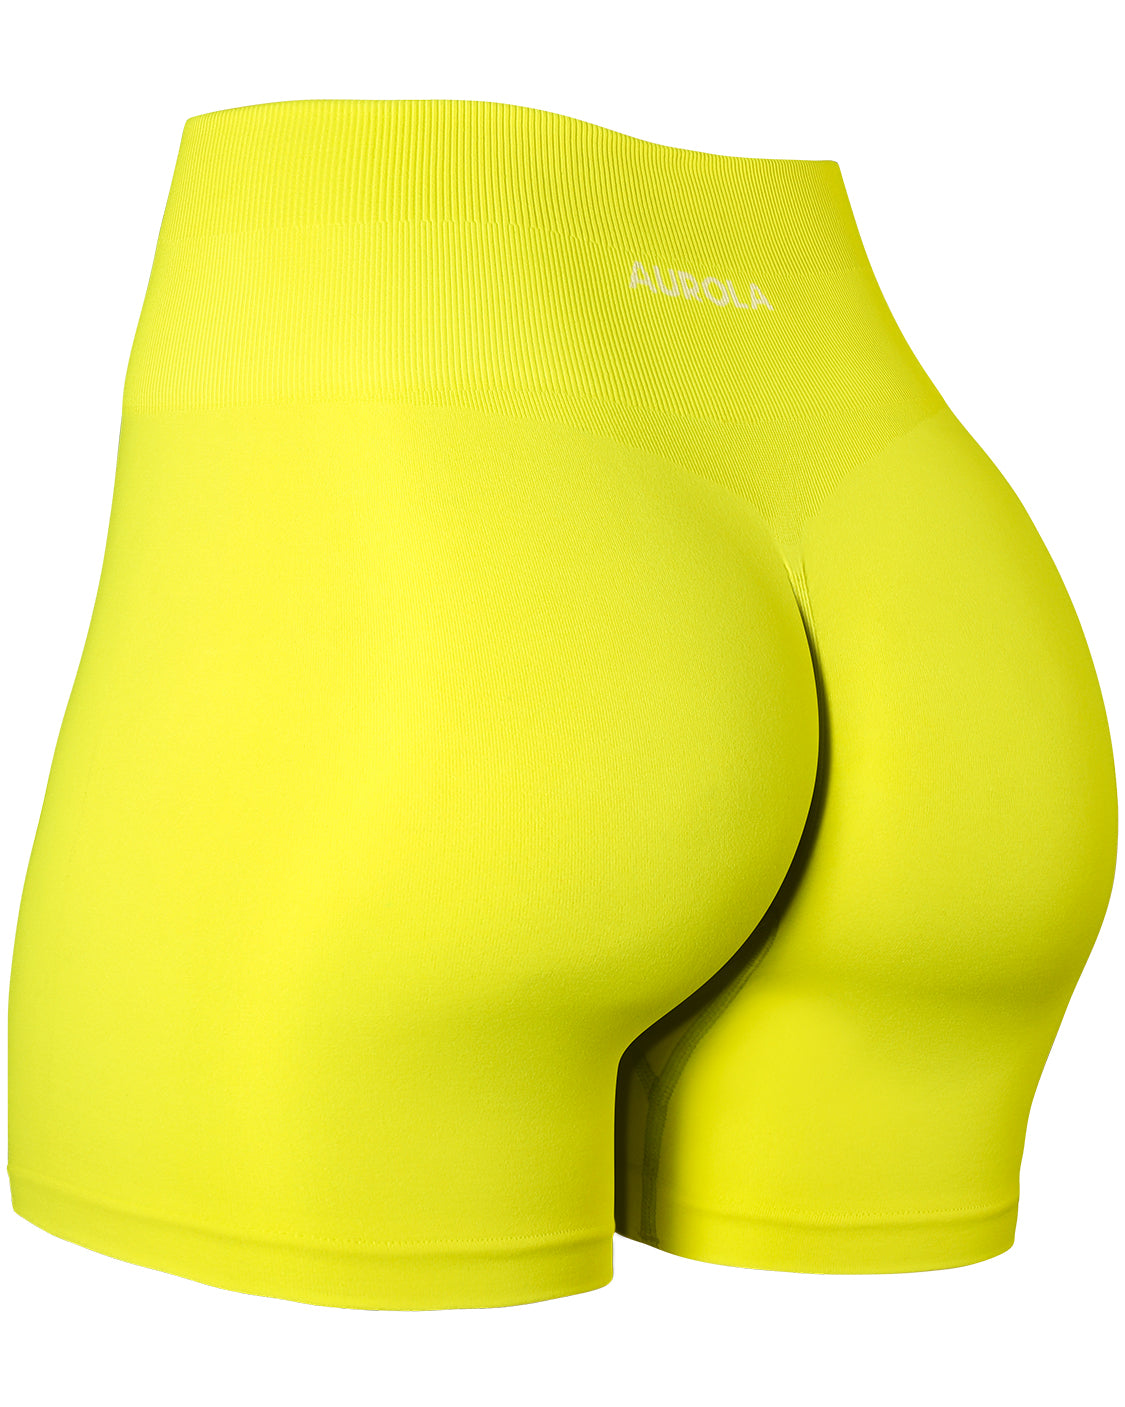 AUROLA Dream Collection Workout Shorts Orange Size M - $17 (46% Off Retail)  - From Logan